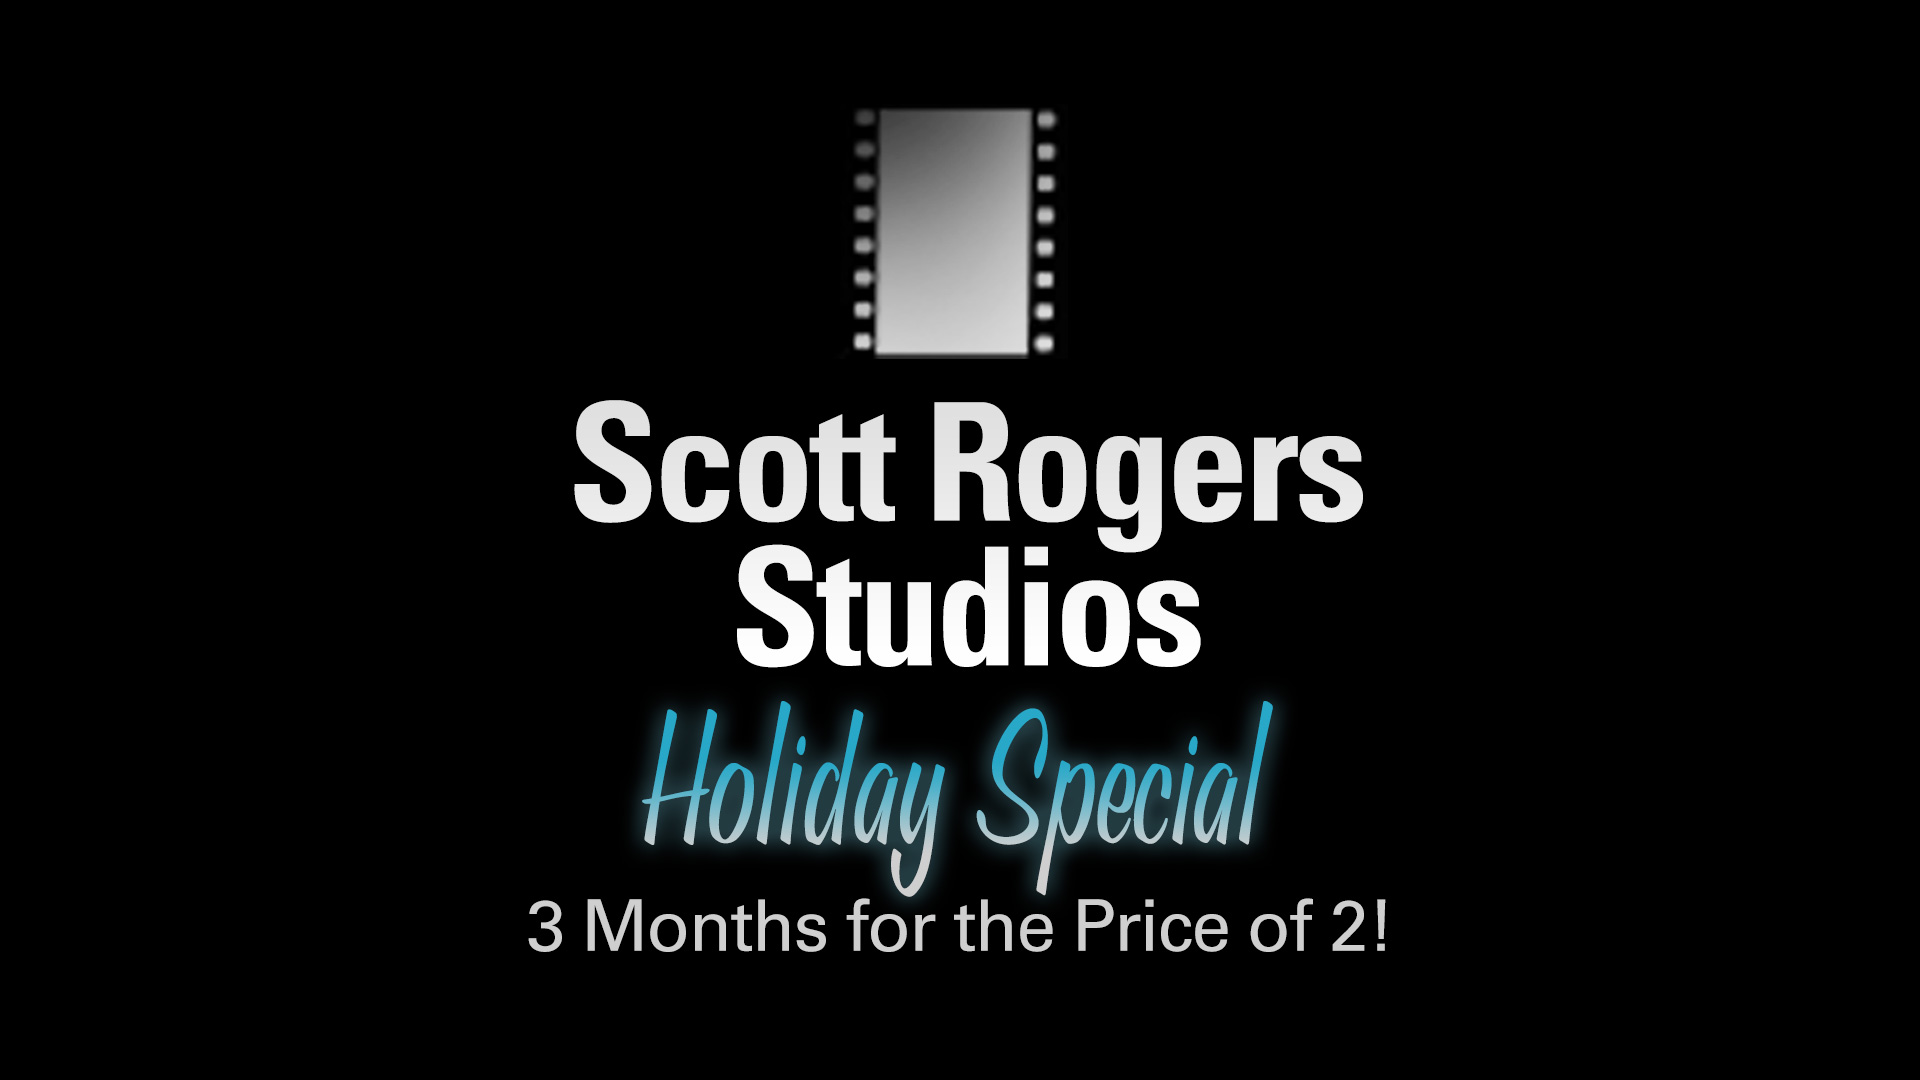 Scott Rogers Studios Holiday Special